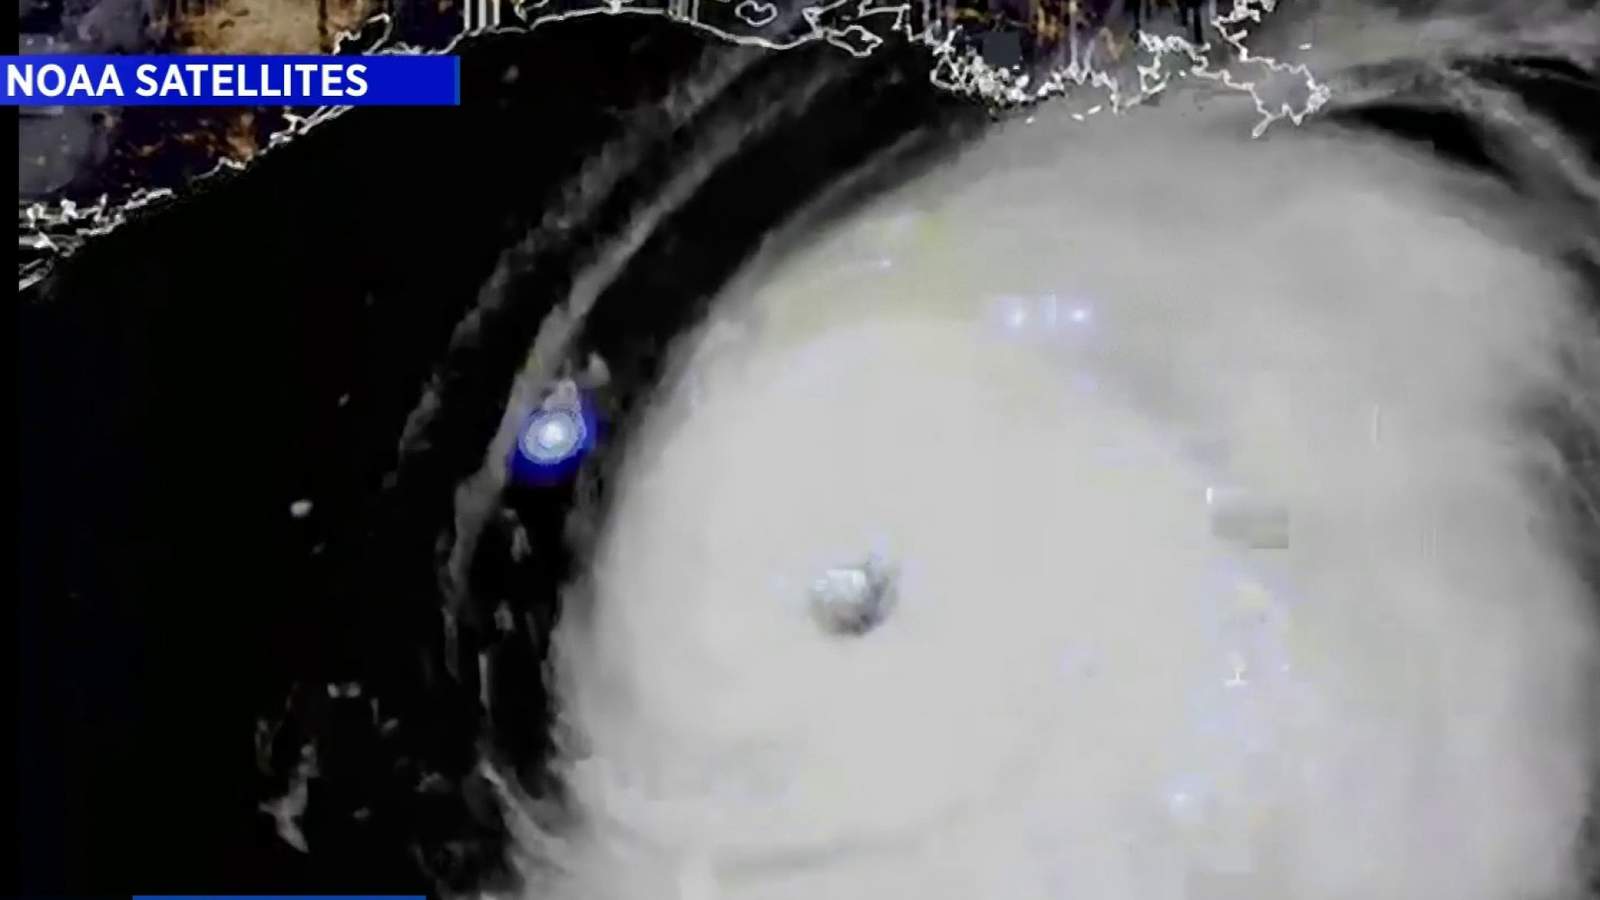 Laura making its way toward Texas, Louisiana as major hurricane